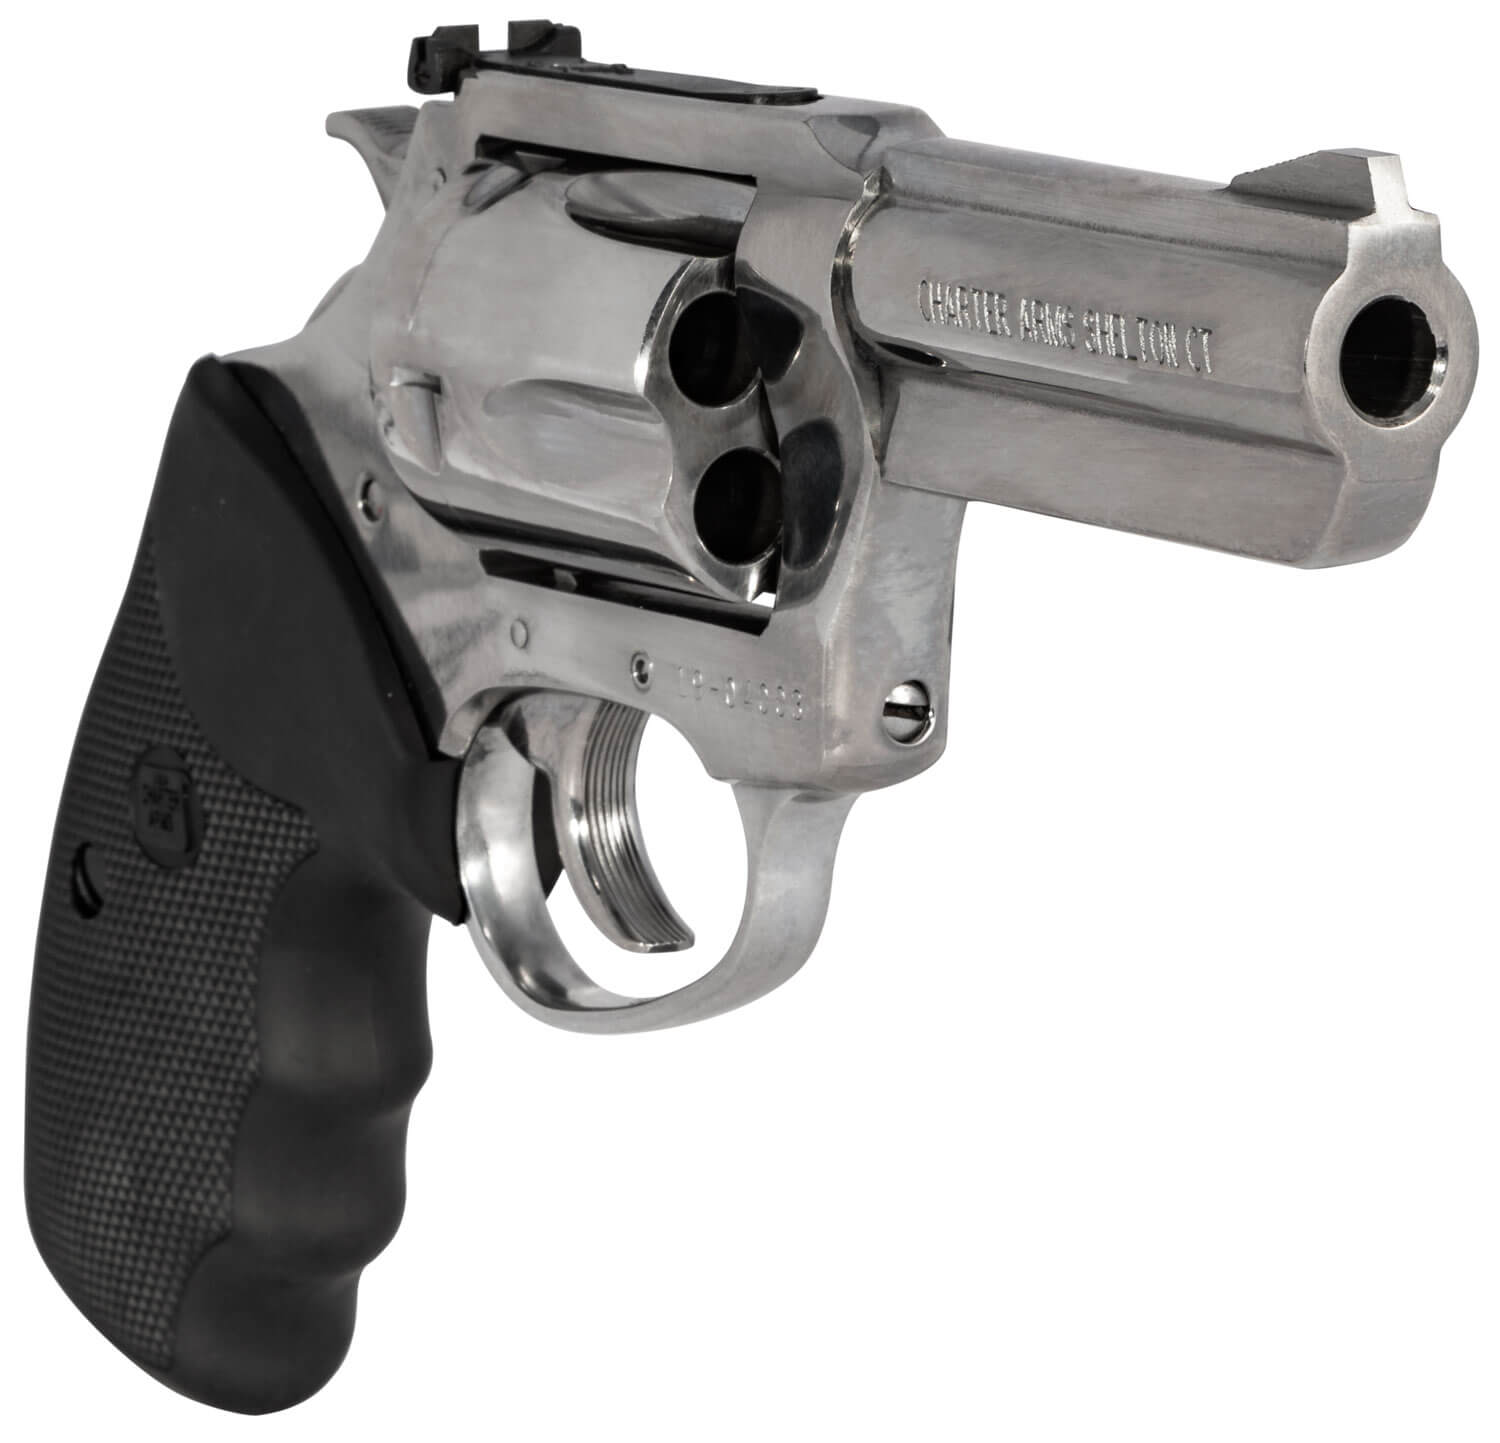 Mustang Arms .357 Magnum, Deus Ex Wiki